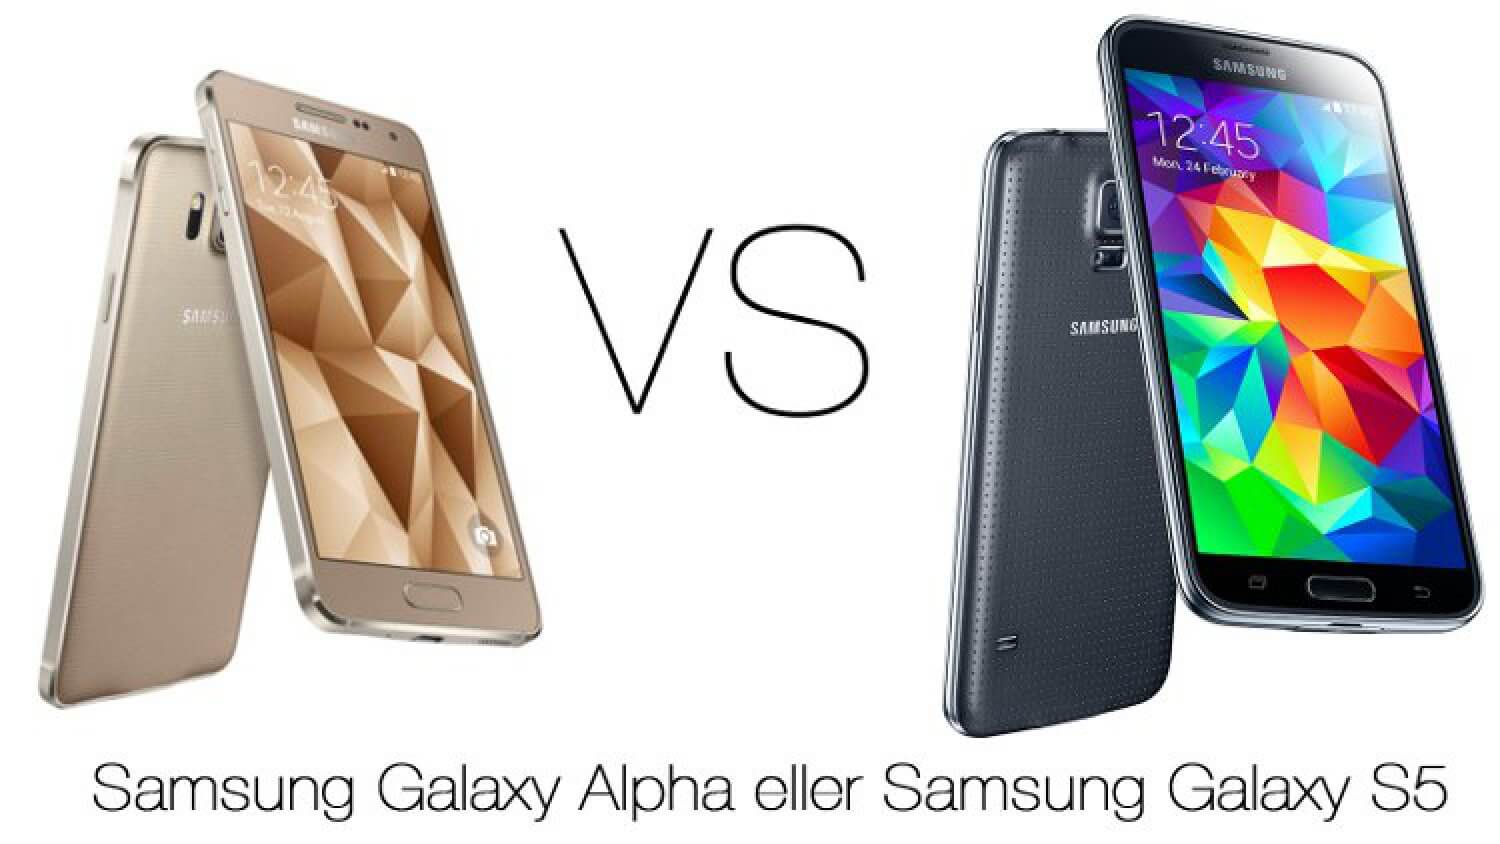 Samsung Galaxy Alpha и S5